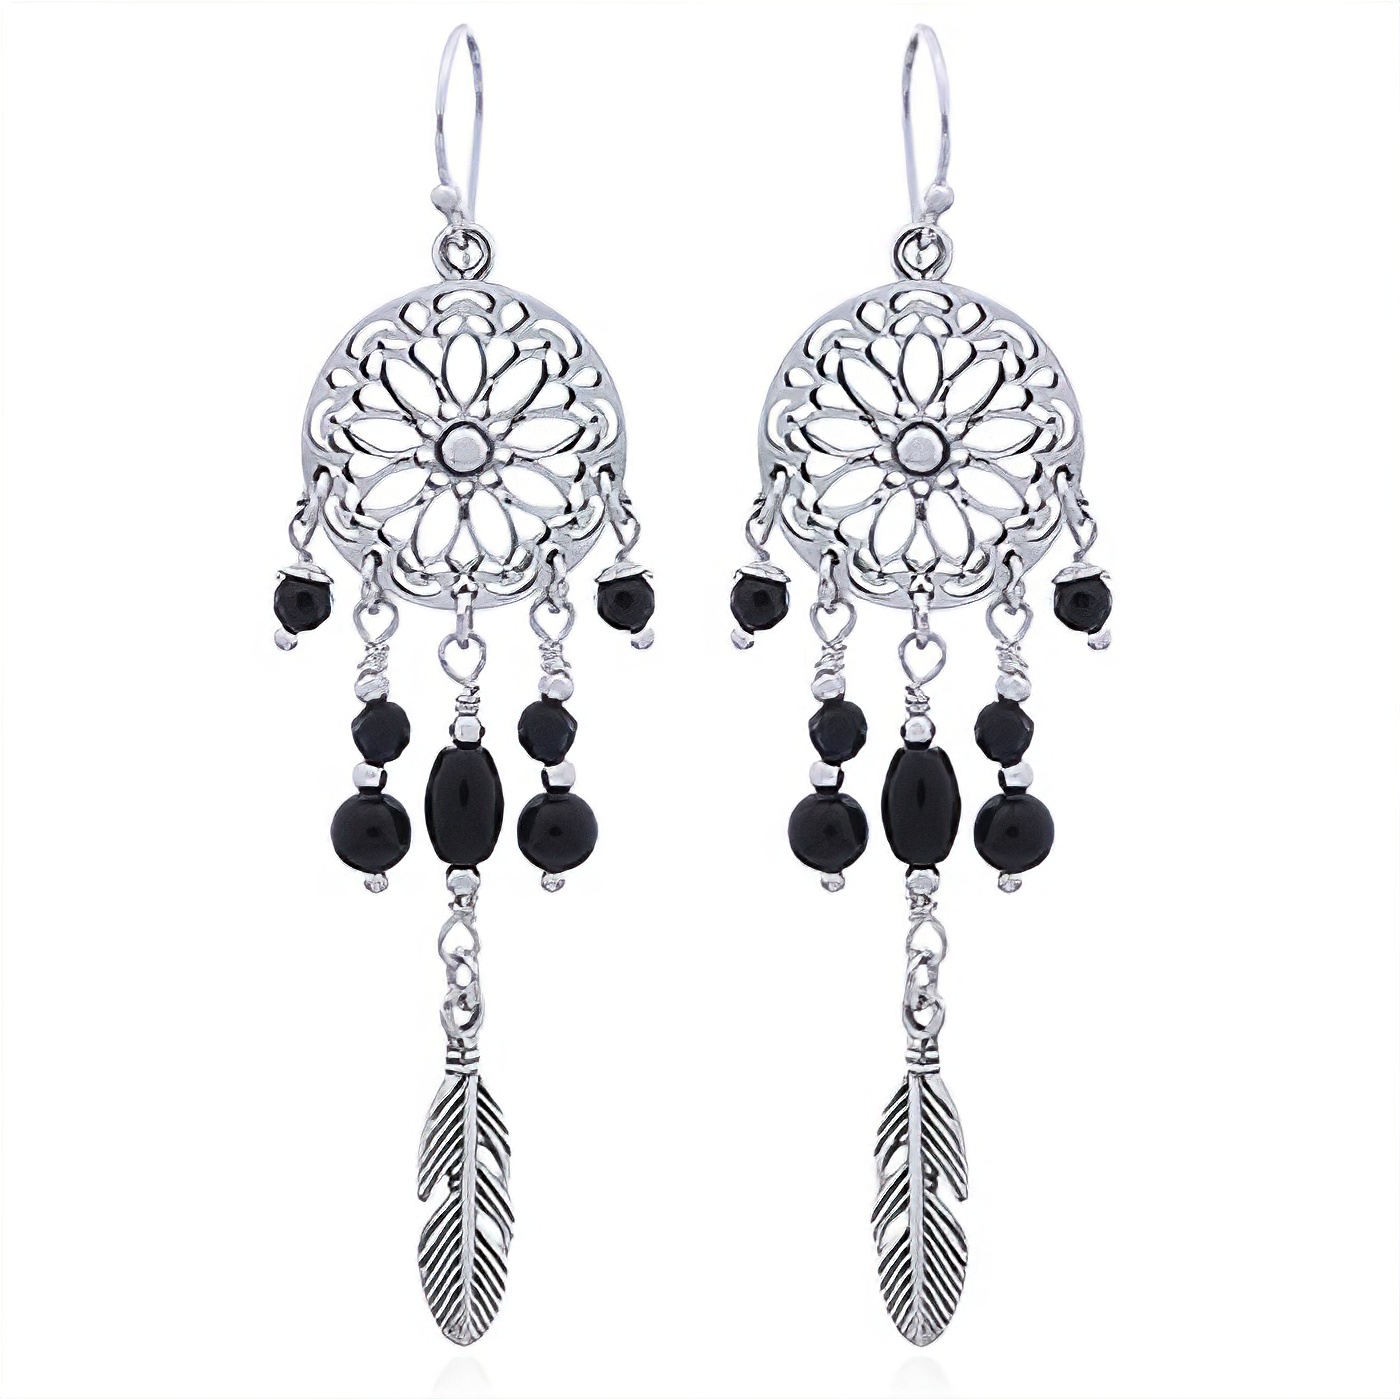 Silver and Black Agate Dream Catcher Earrings by BeYindi 